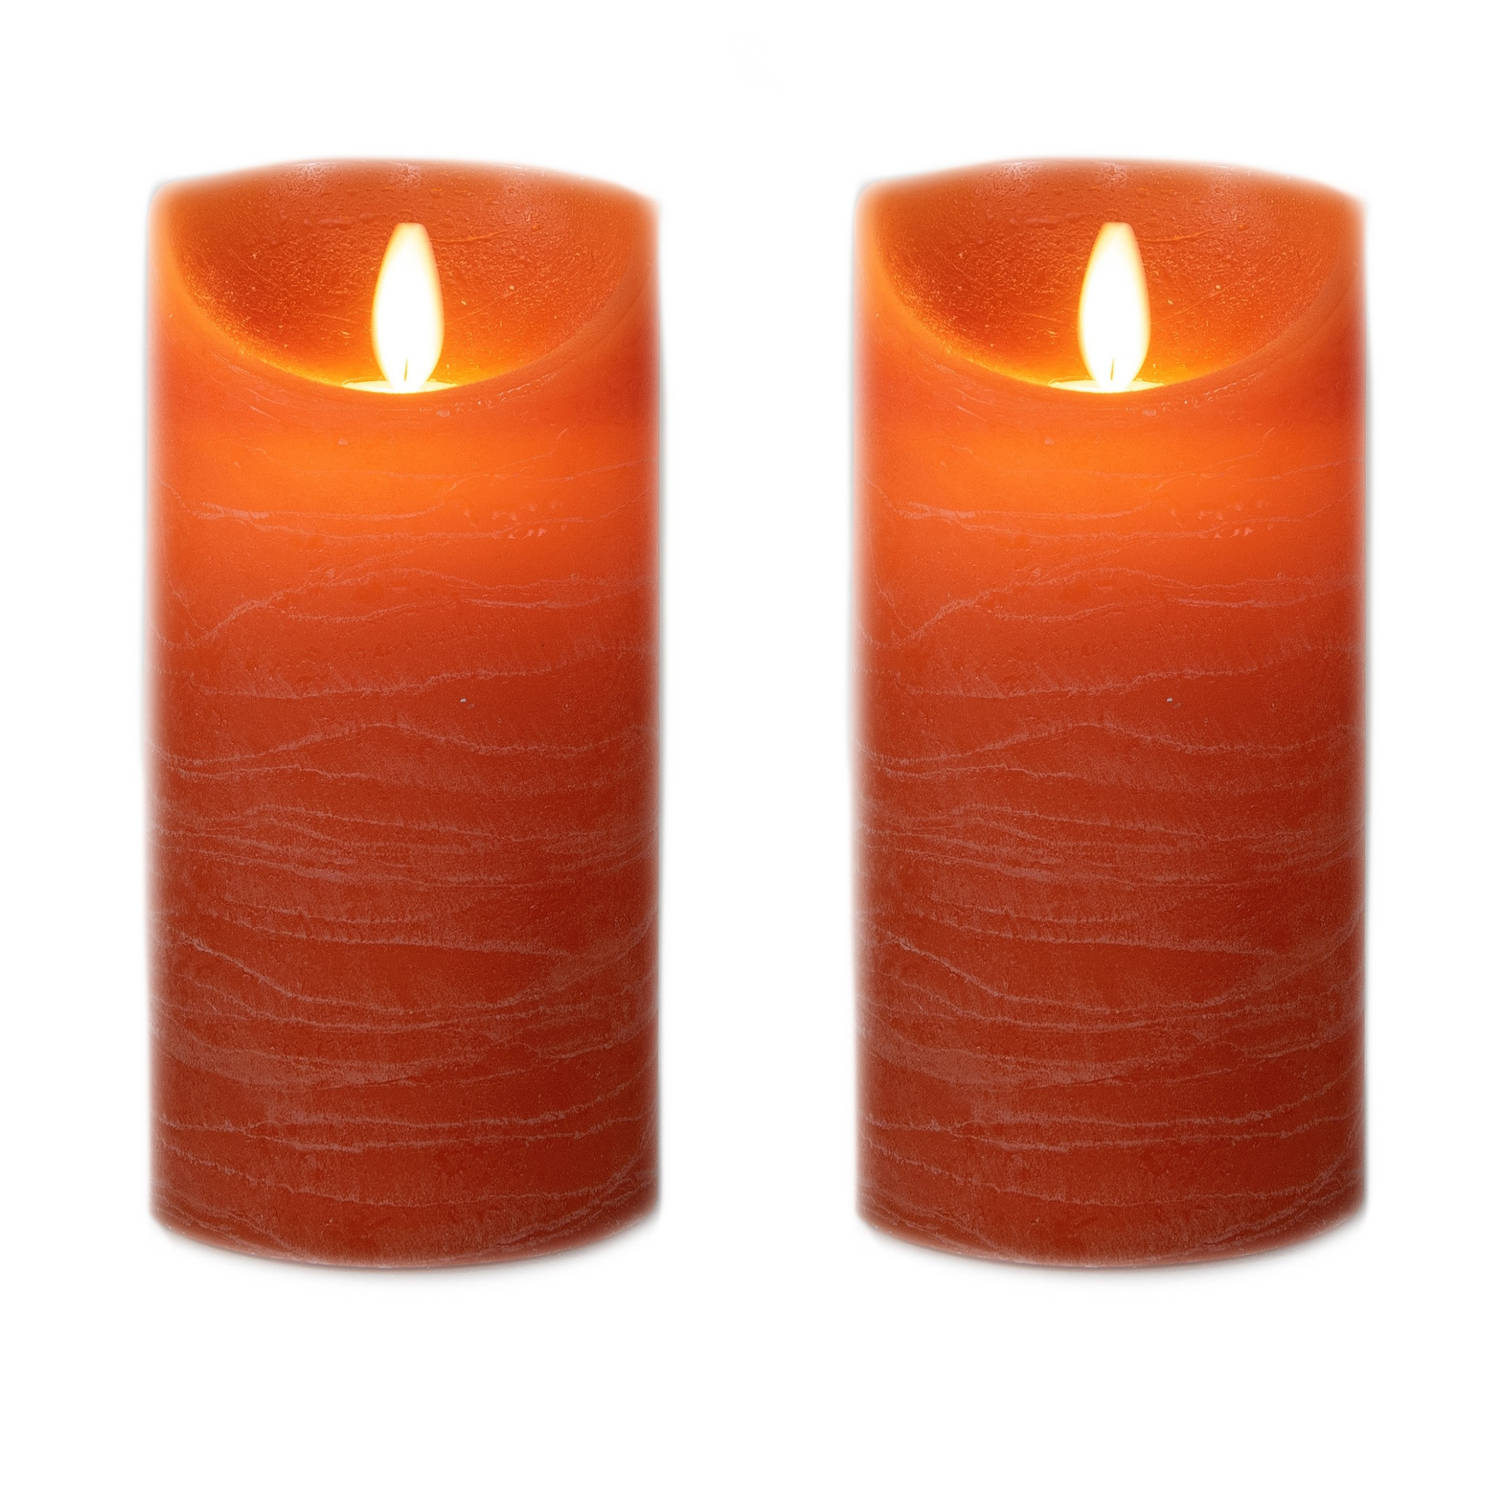 picknick kader prijs 2x stuks led kaarsen/stompkaarsen oranje D7,5 x H15 cm - LED kaarsen |  Blokker